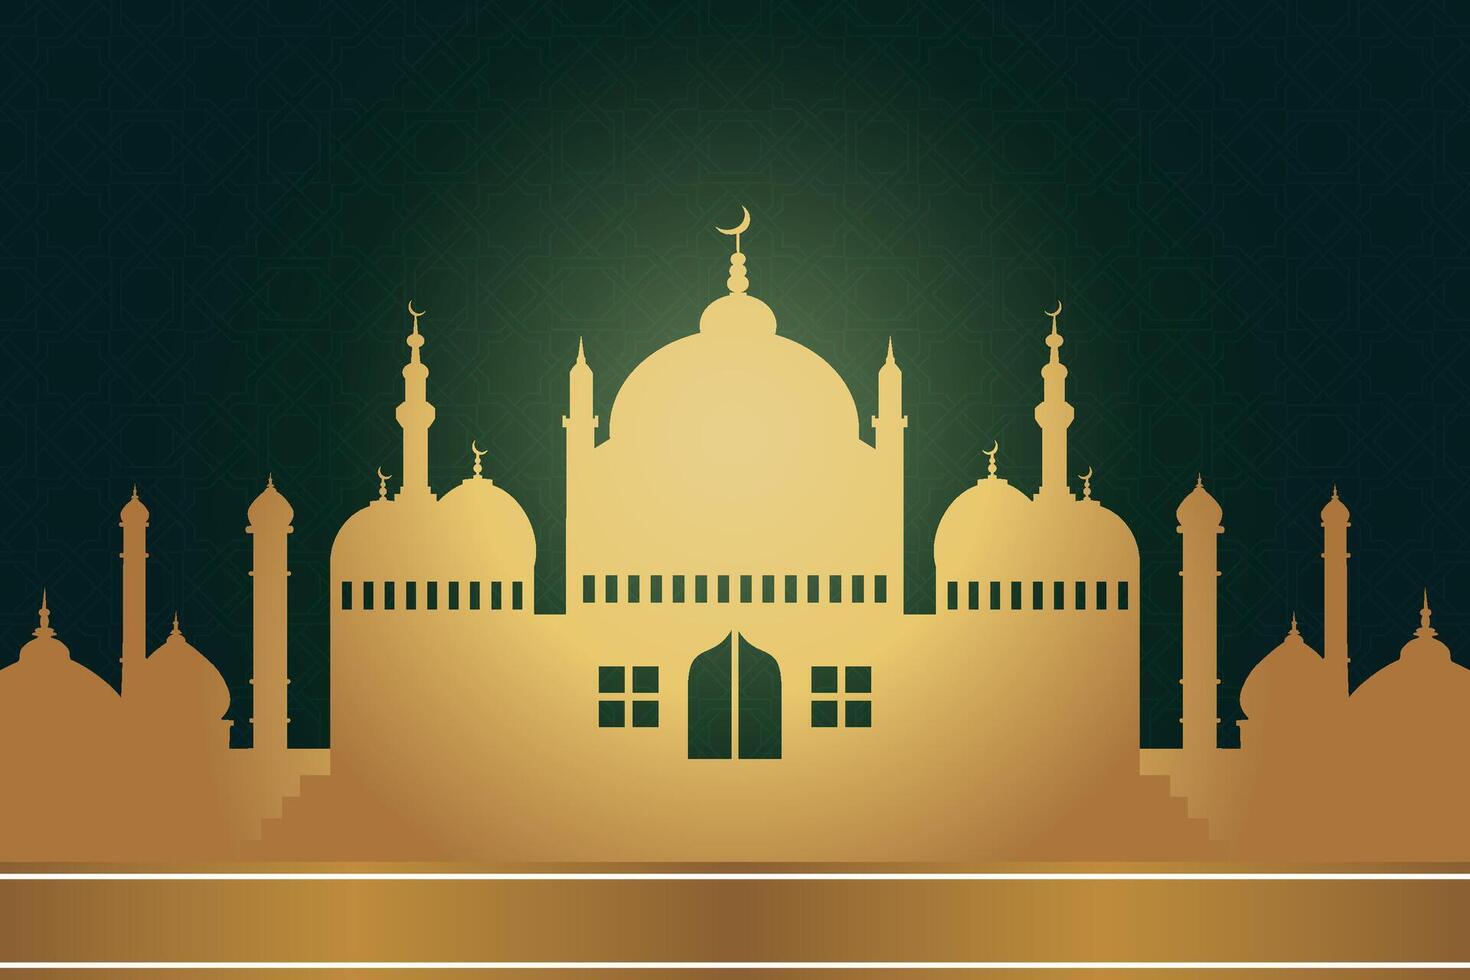 eid al fitr, ramadhan decorativo saludo tarjeta vector